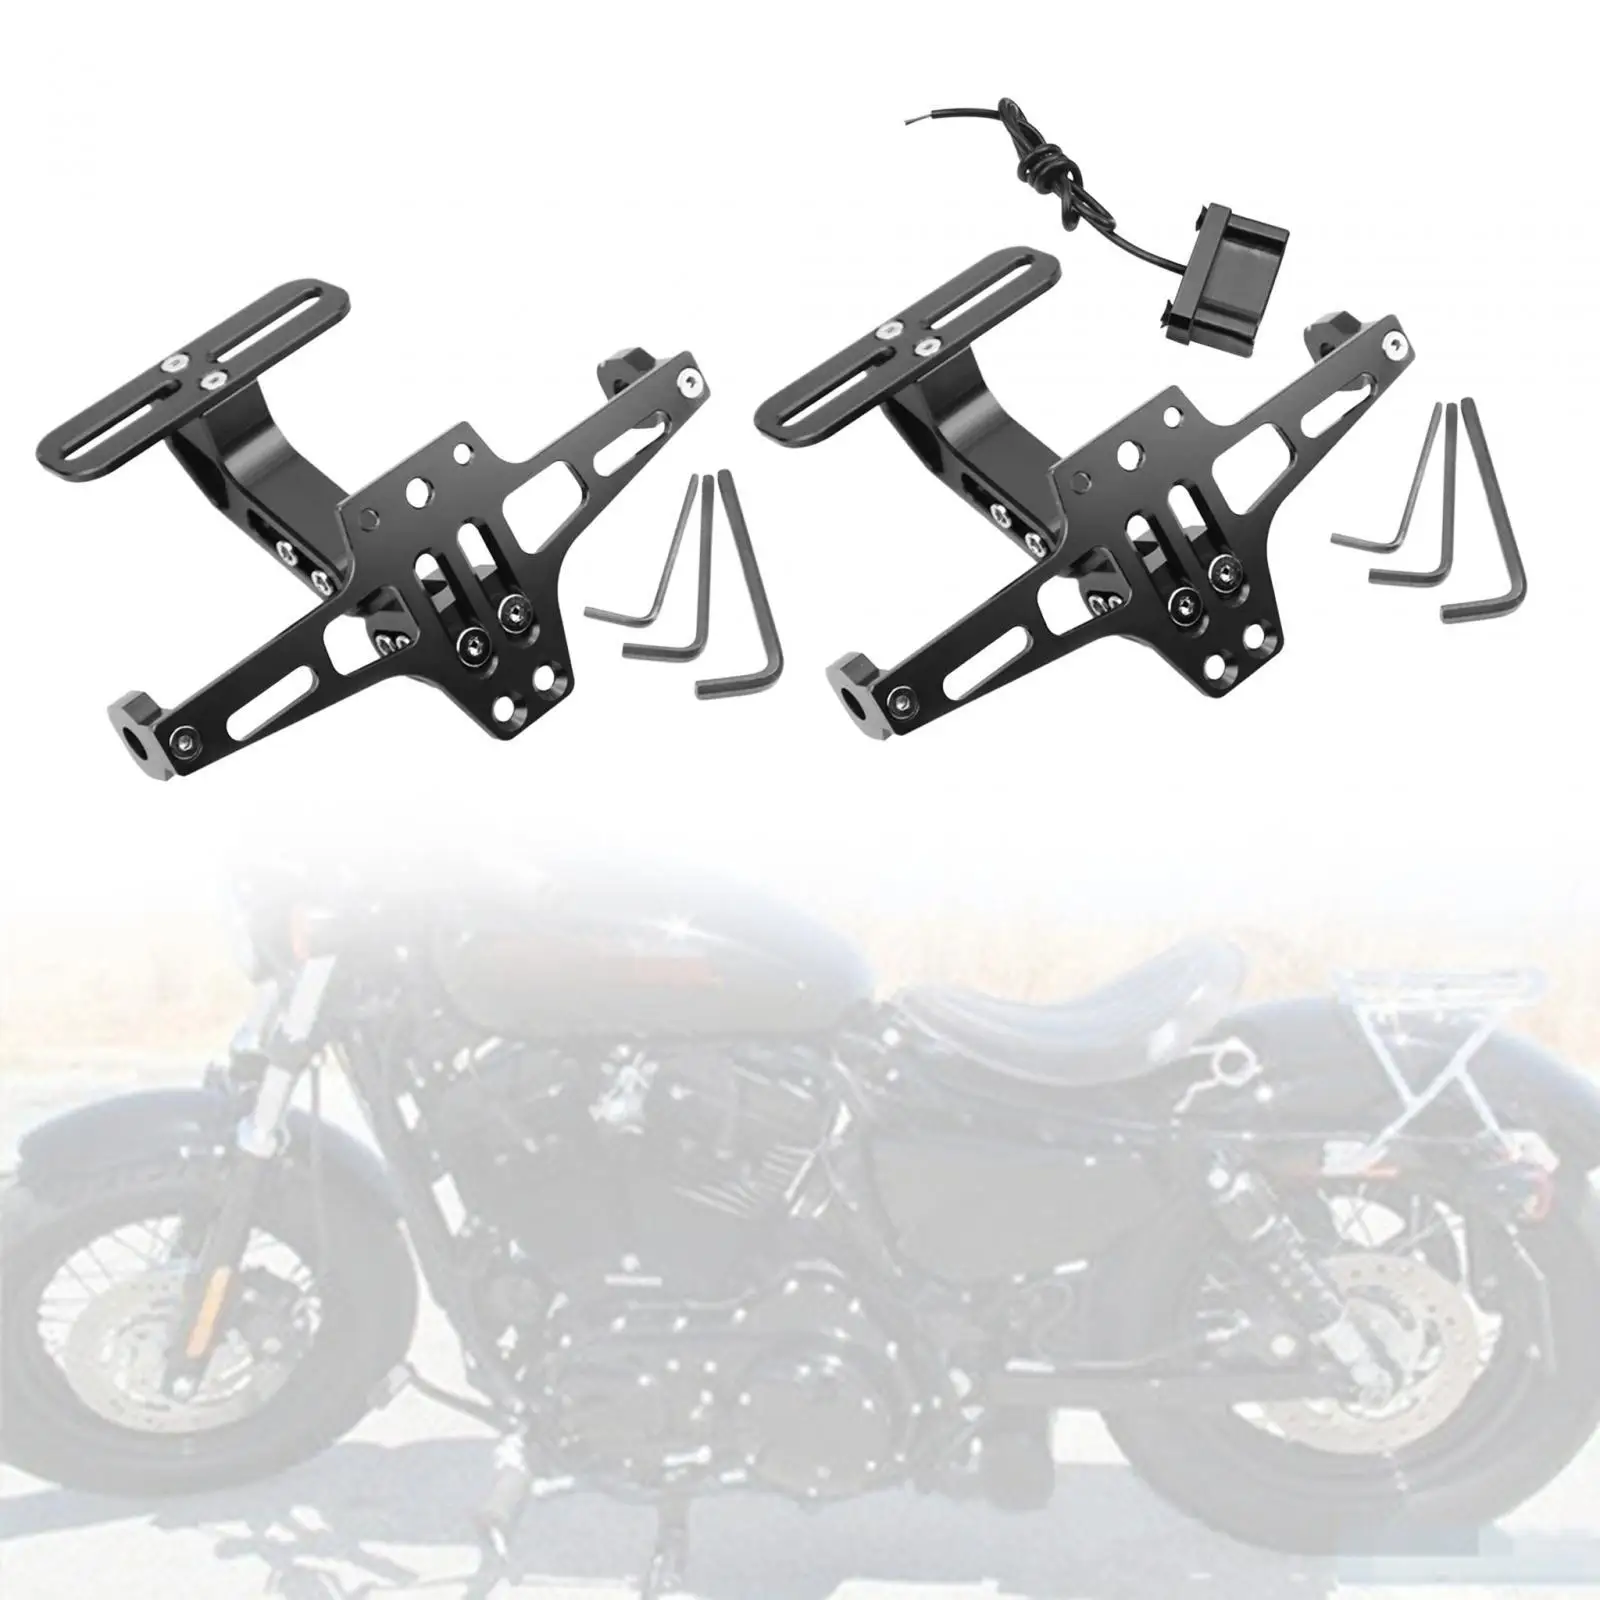 Motorcycle License Plate Bracket Universal Sturdy Motorbike Accessories High